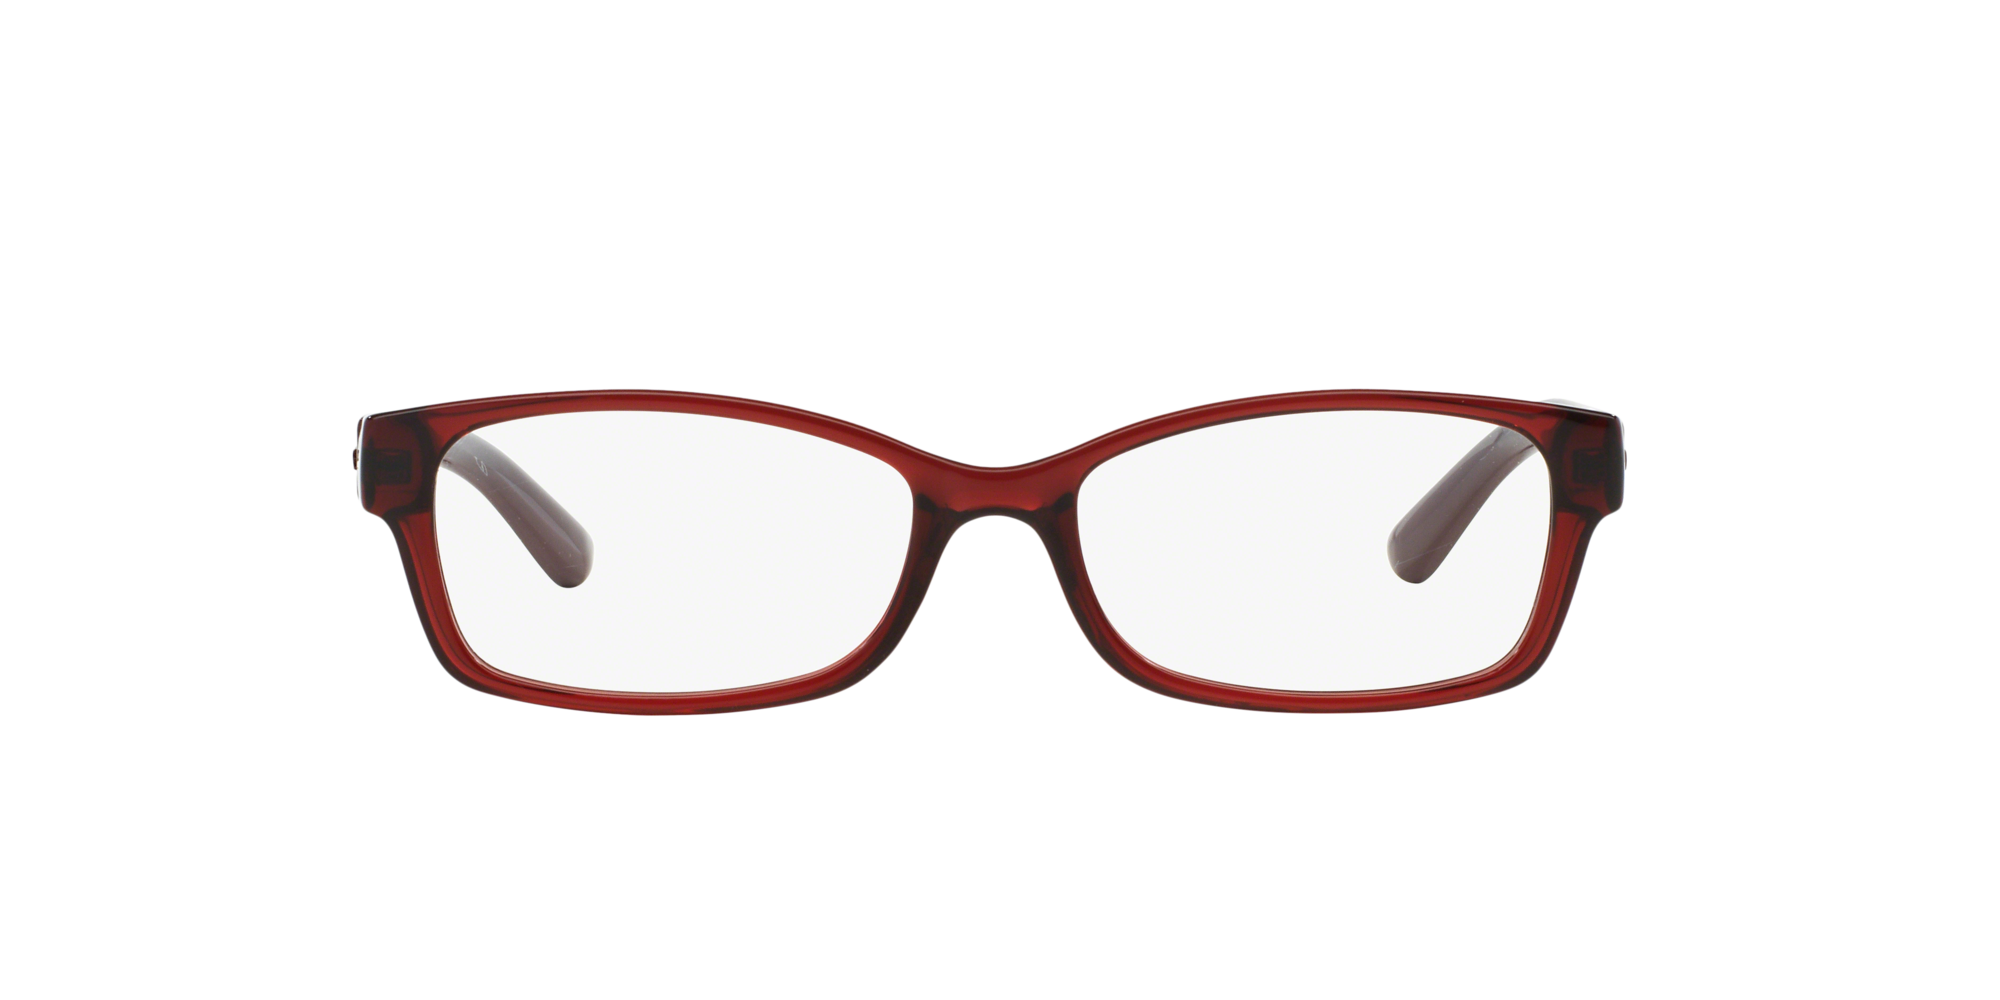 armani exchange glasses lenscrafters